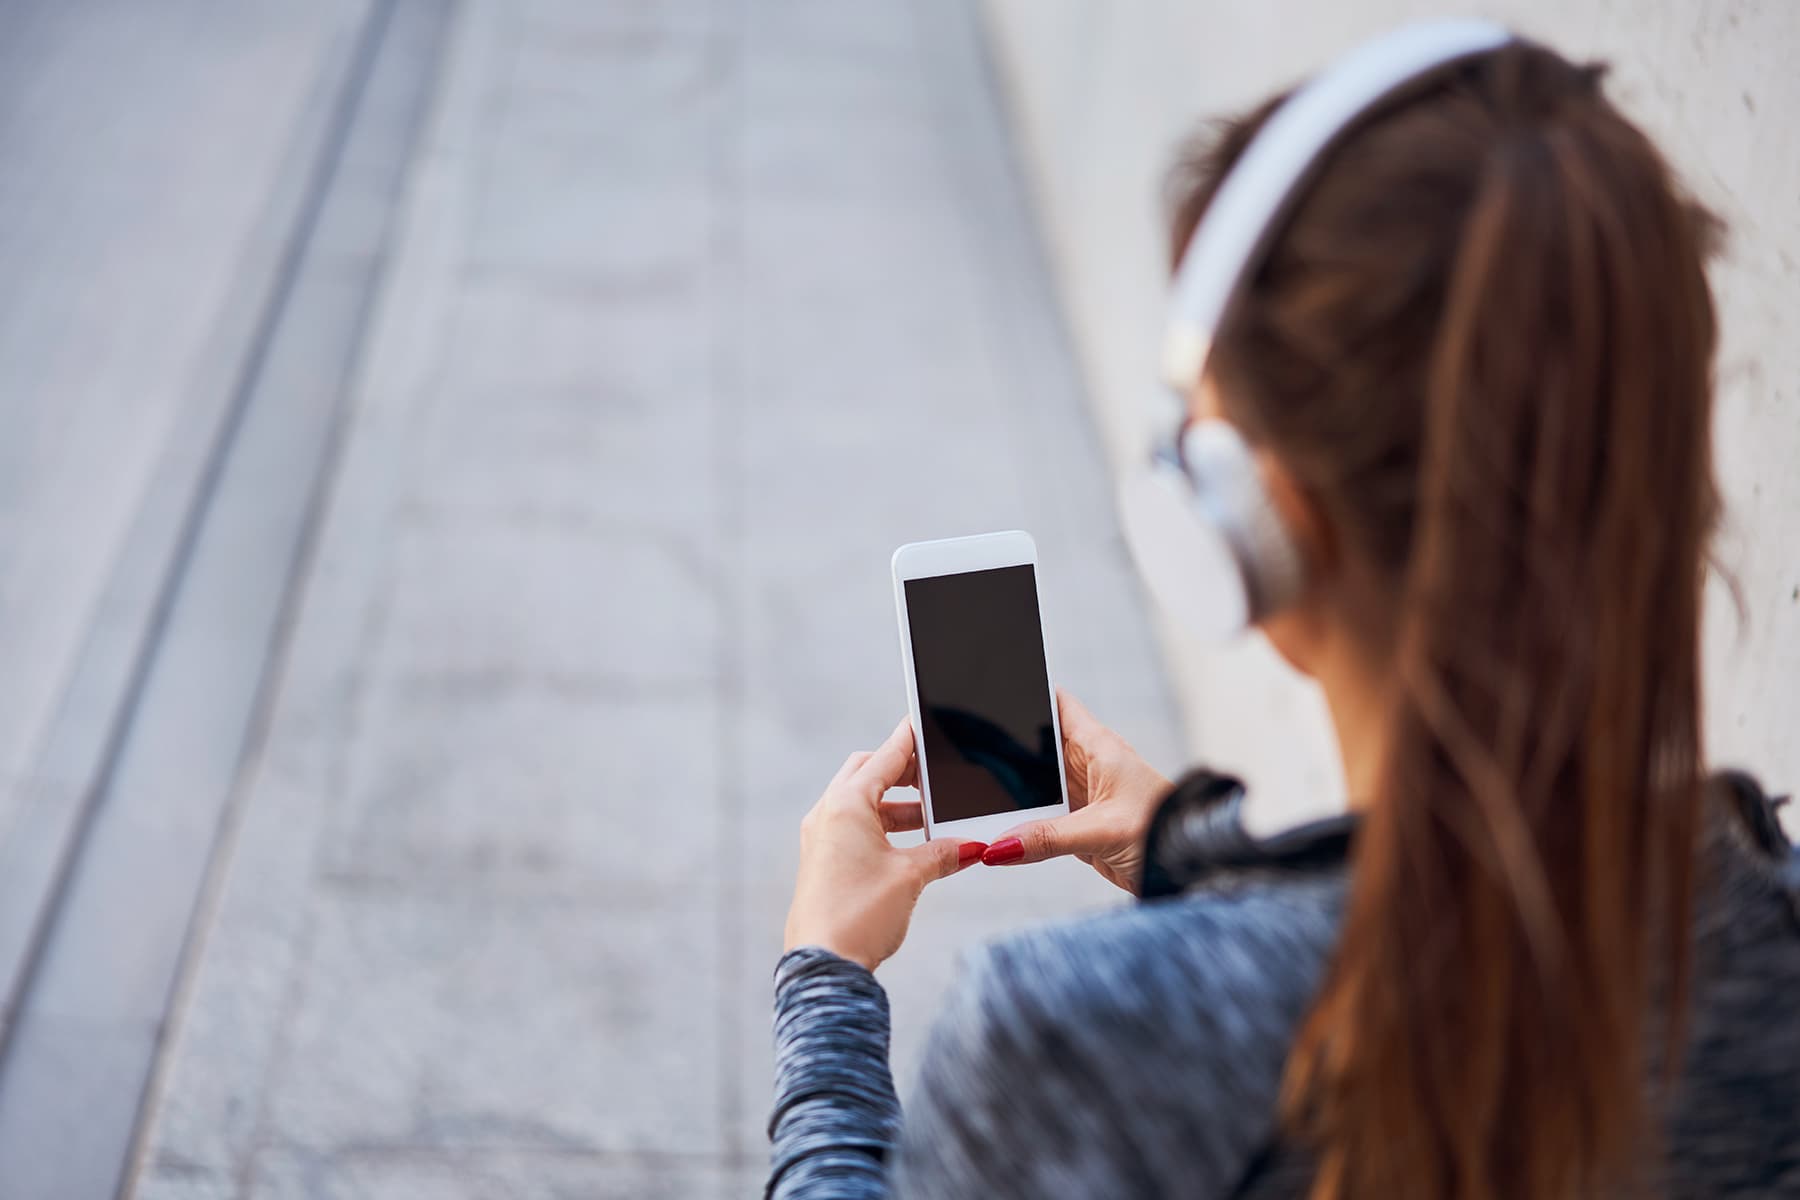 Voices in Your Head: Wearing Headphones Changes Listening